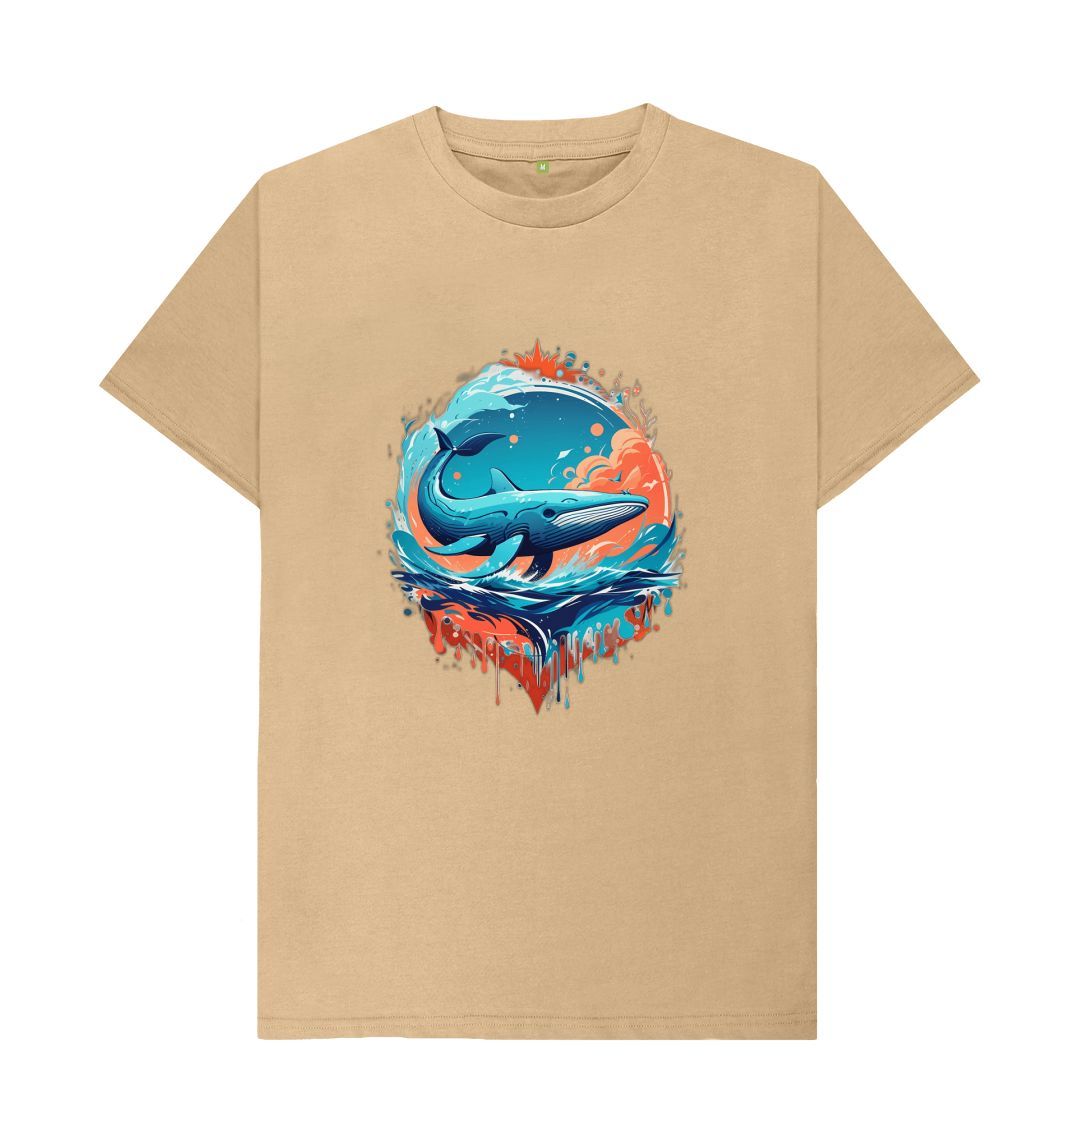 Men's blue whale design organic cotton t-shirt - Premium Eco Chic Printed T-shirt from Eco Threadz - Just £20! Shop now at Eco Threadz